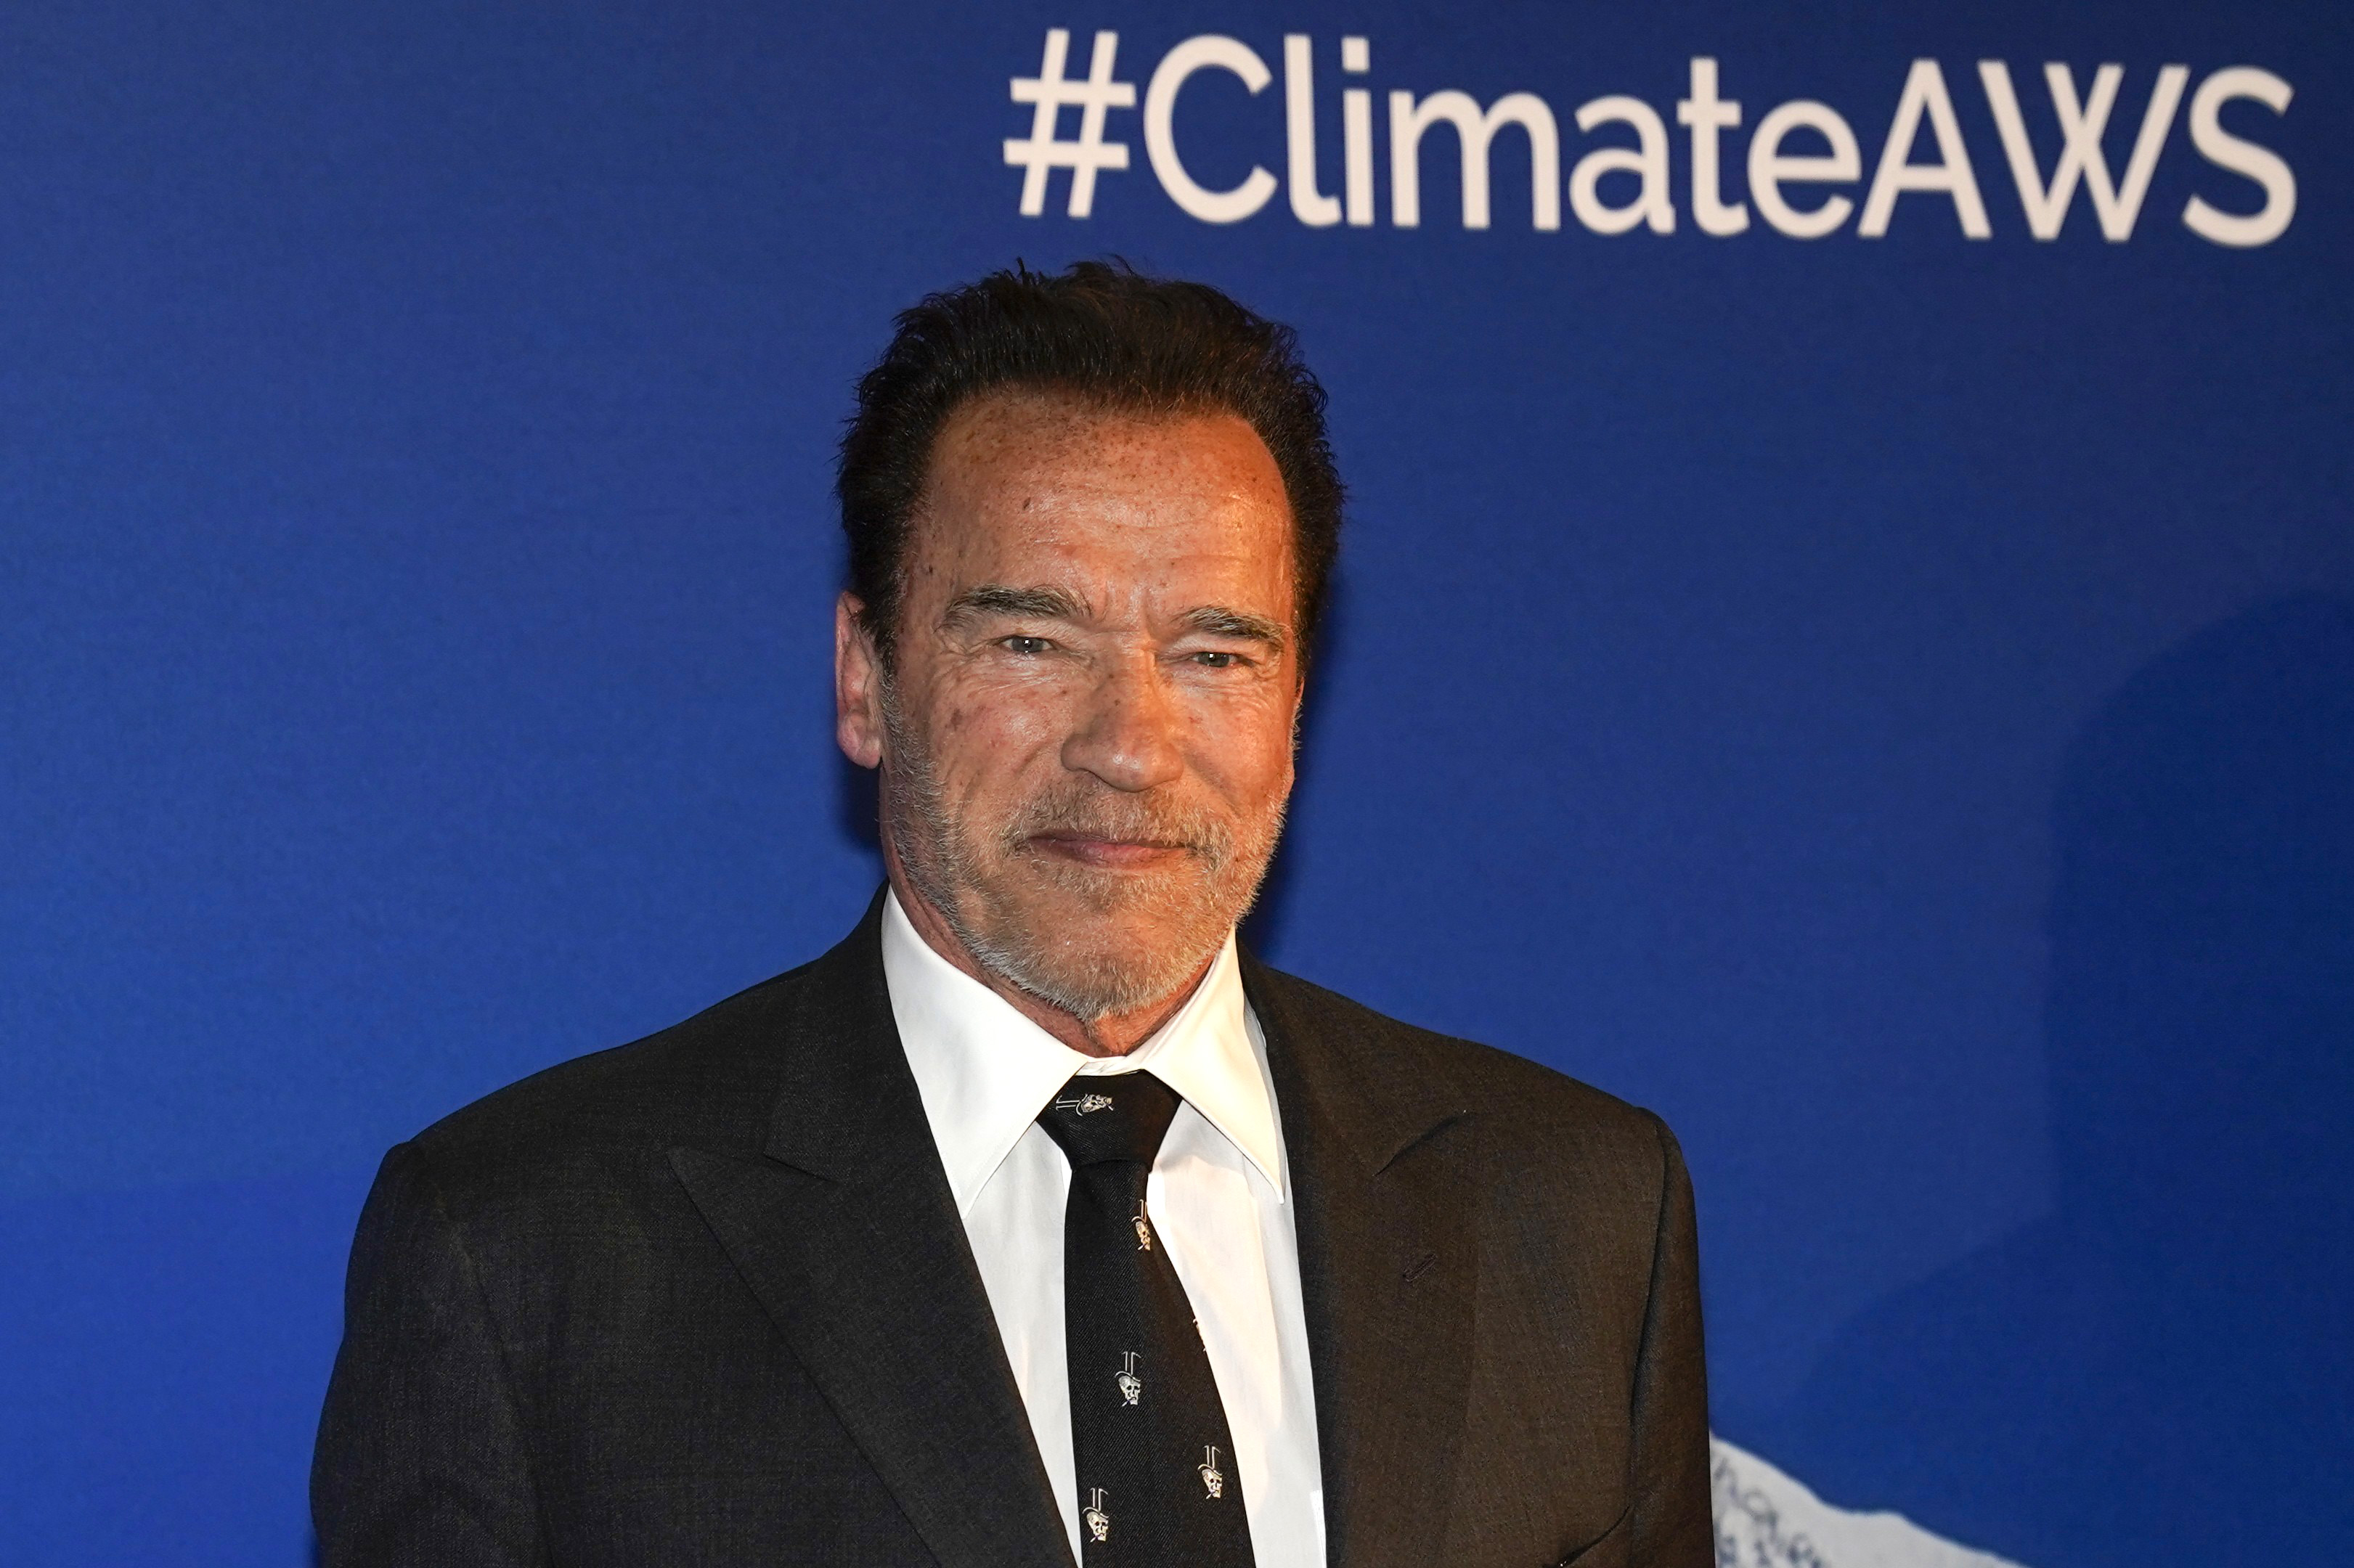 Arnold Schwarzenegger Says He Feels ‘Fantastic' After Undergoing Third Heart Surgery